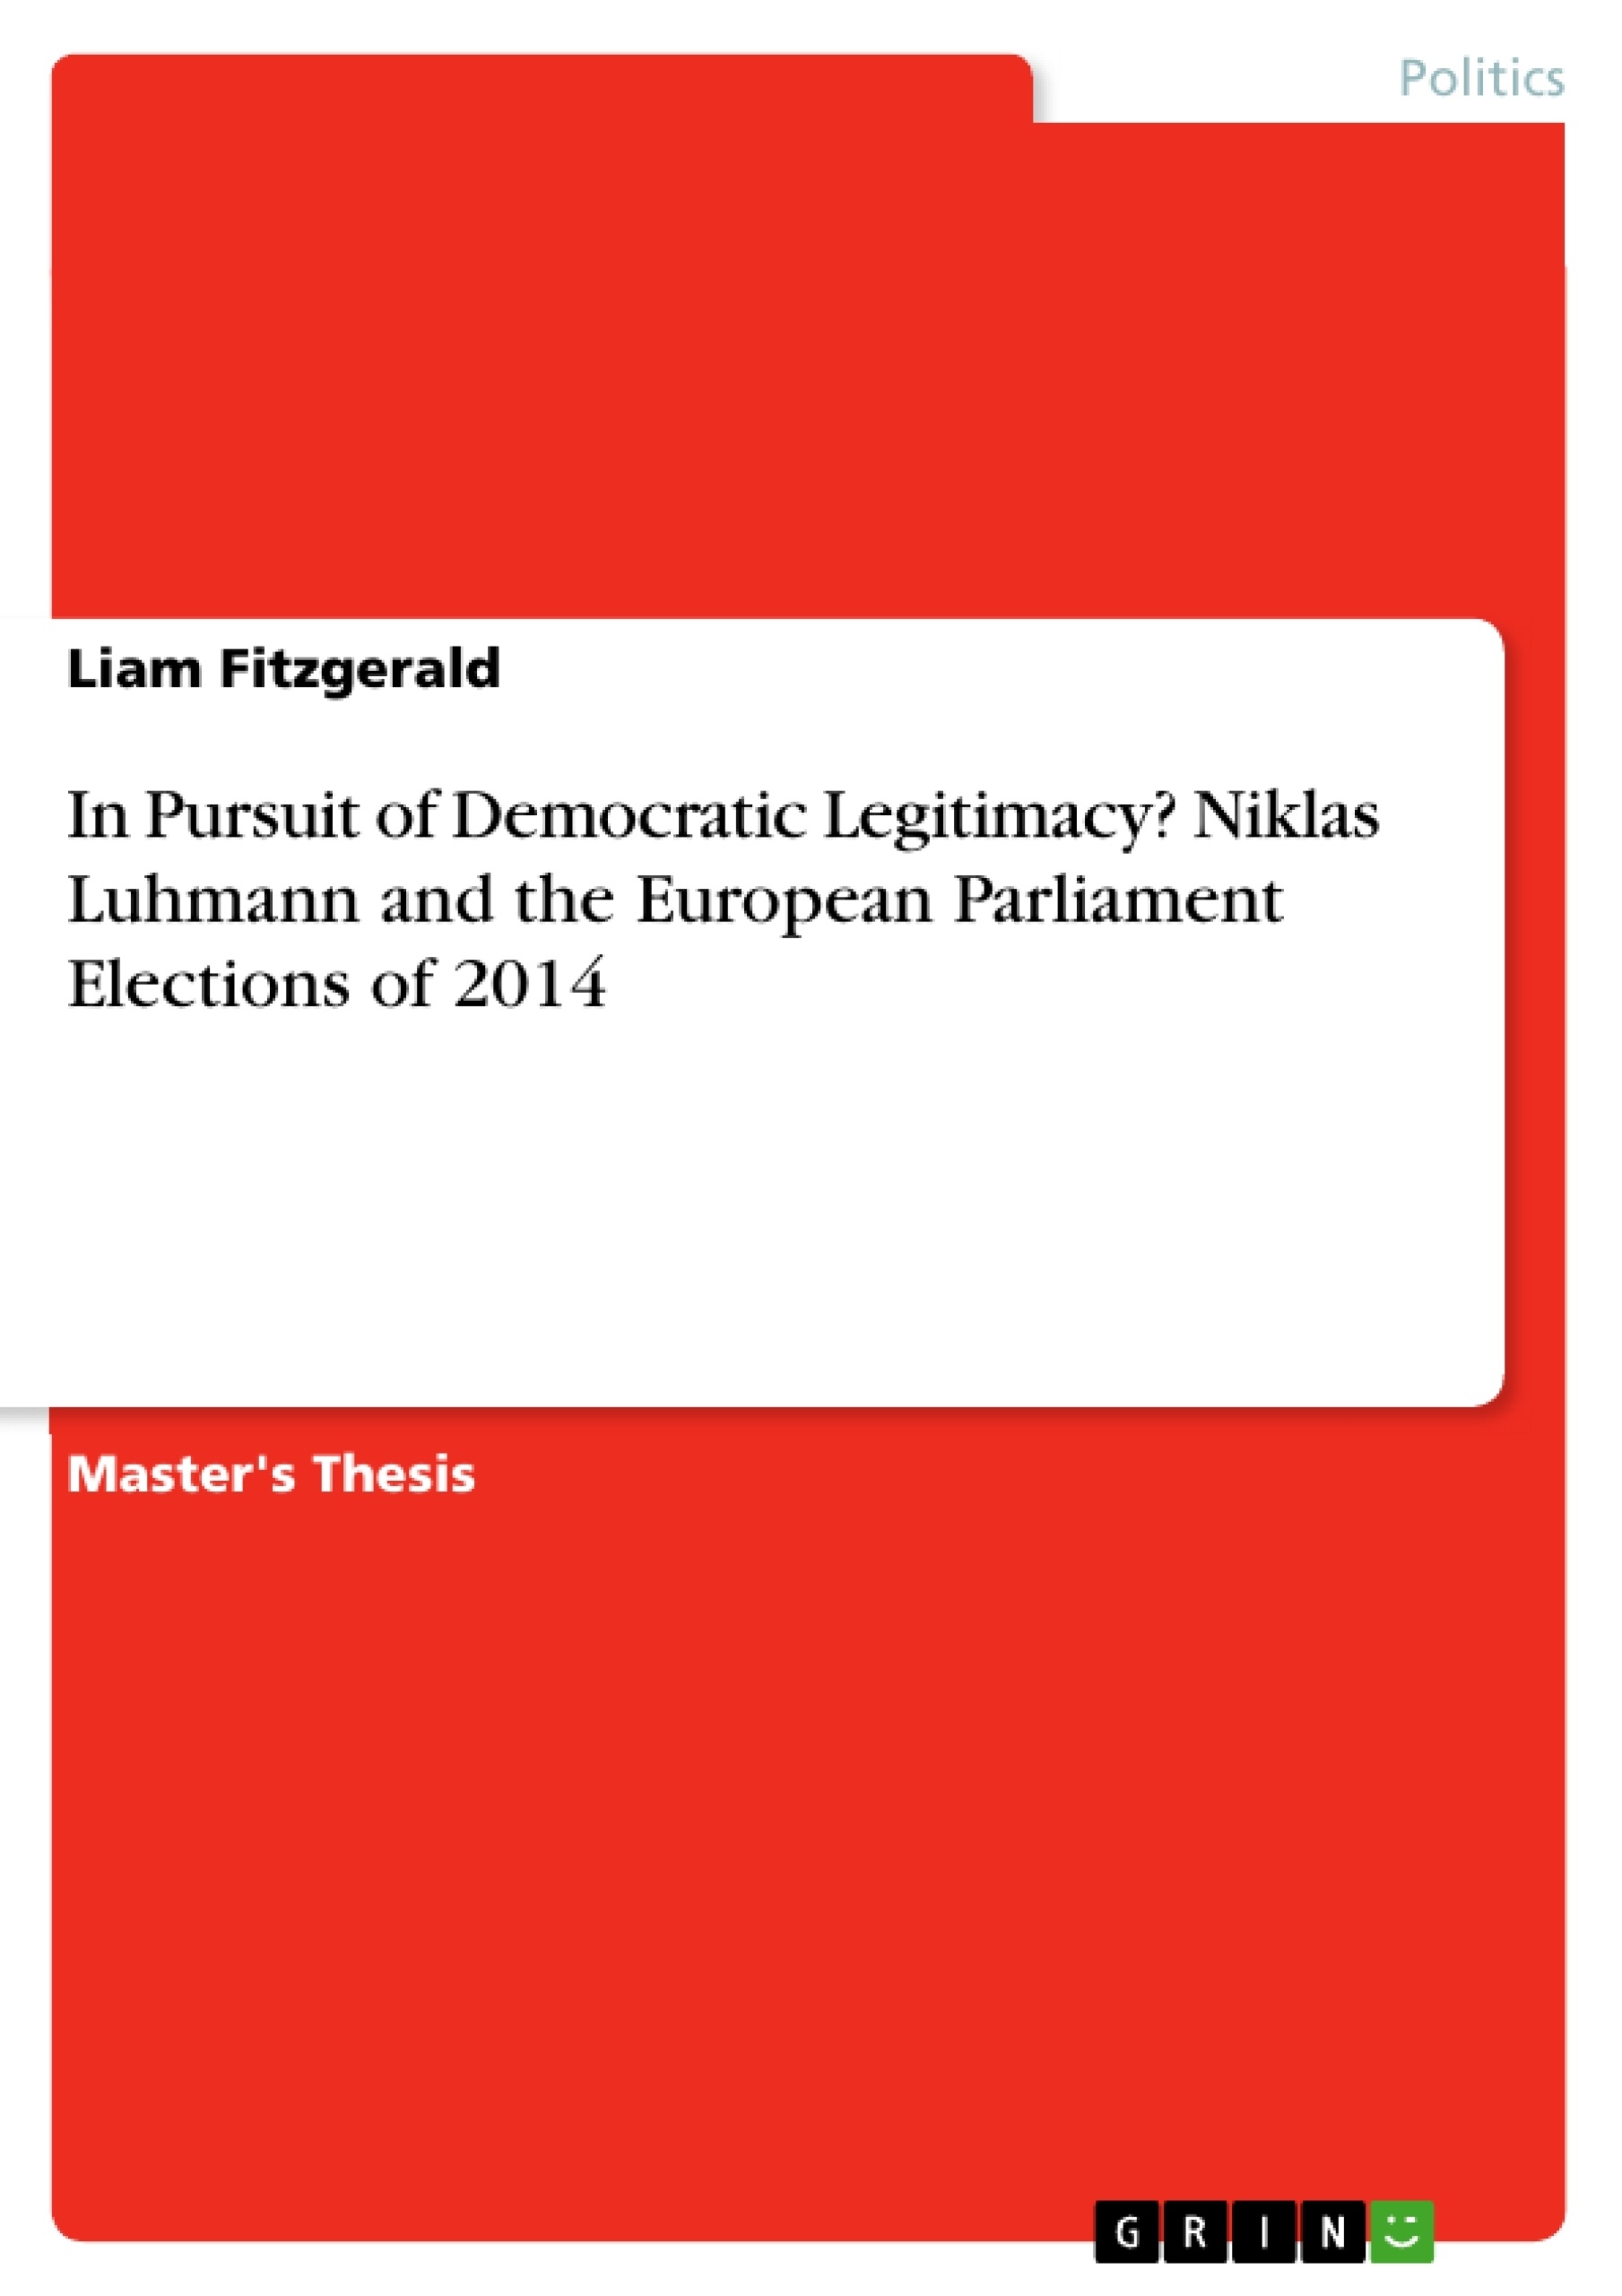 Titre: In Pursuit of Democratic Legitimacy? Niklas Luhmann and the European Parliament Elections of 2014